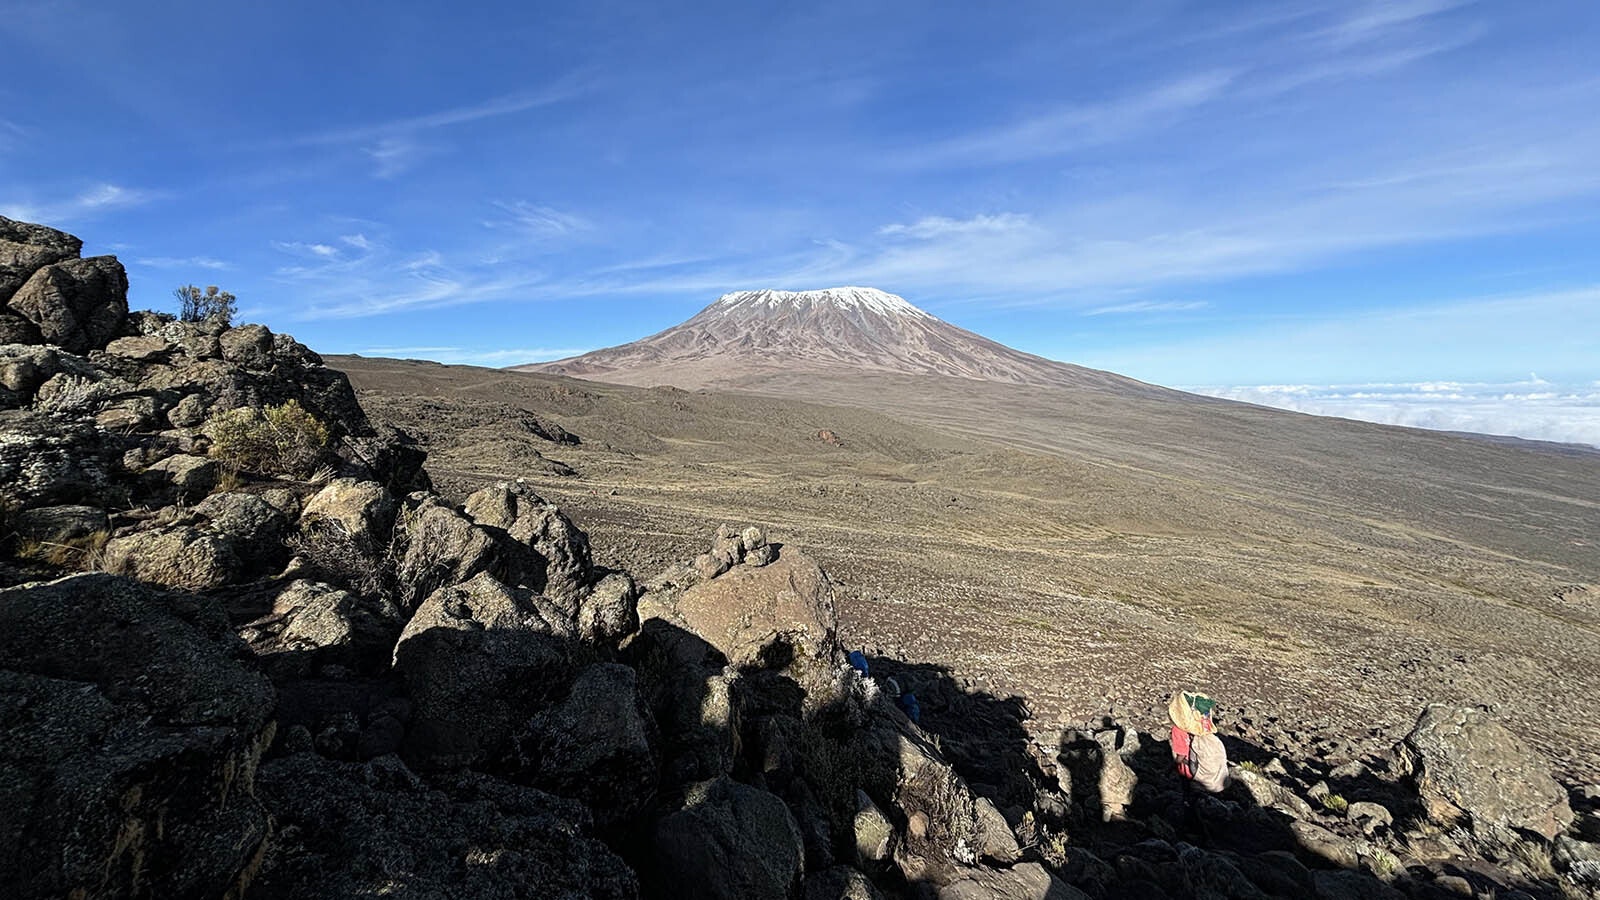 Mount Kilimanjaro's peak looms in the distance.